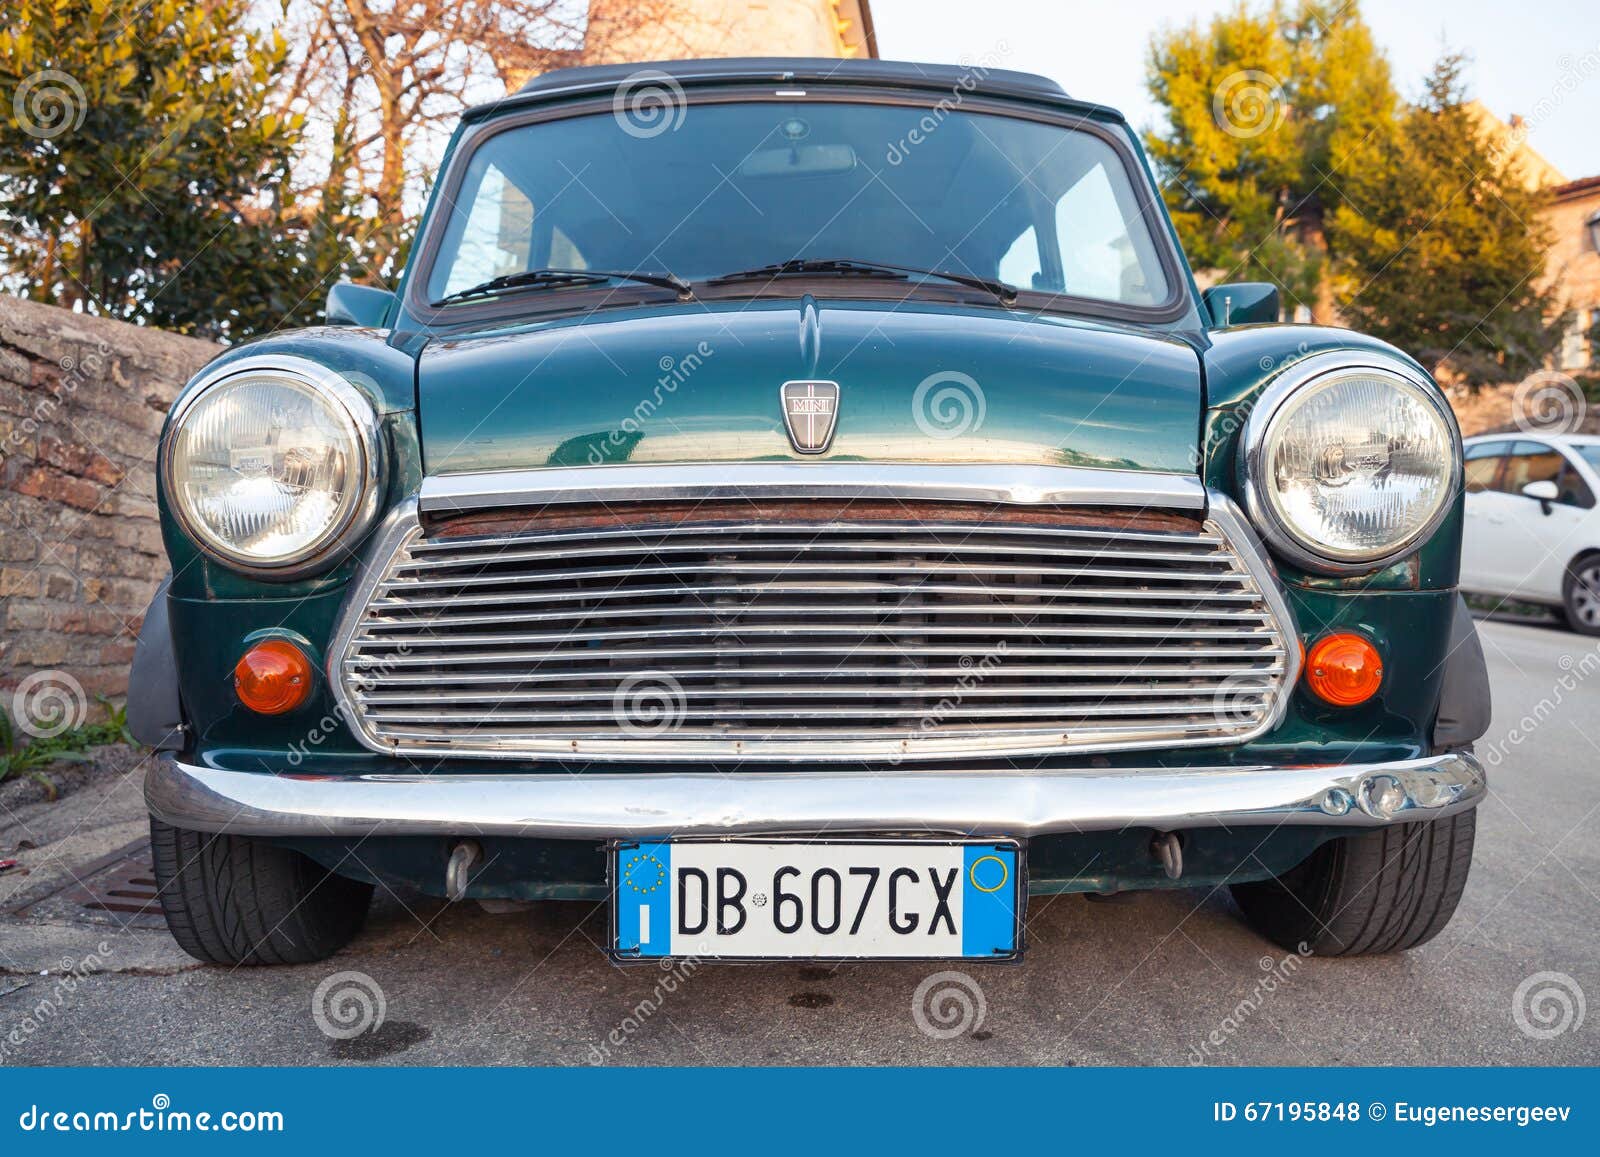 Austin Mini Cooper Mk III Front View Editorial Stock Photo - Image of ...